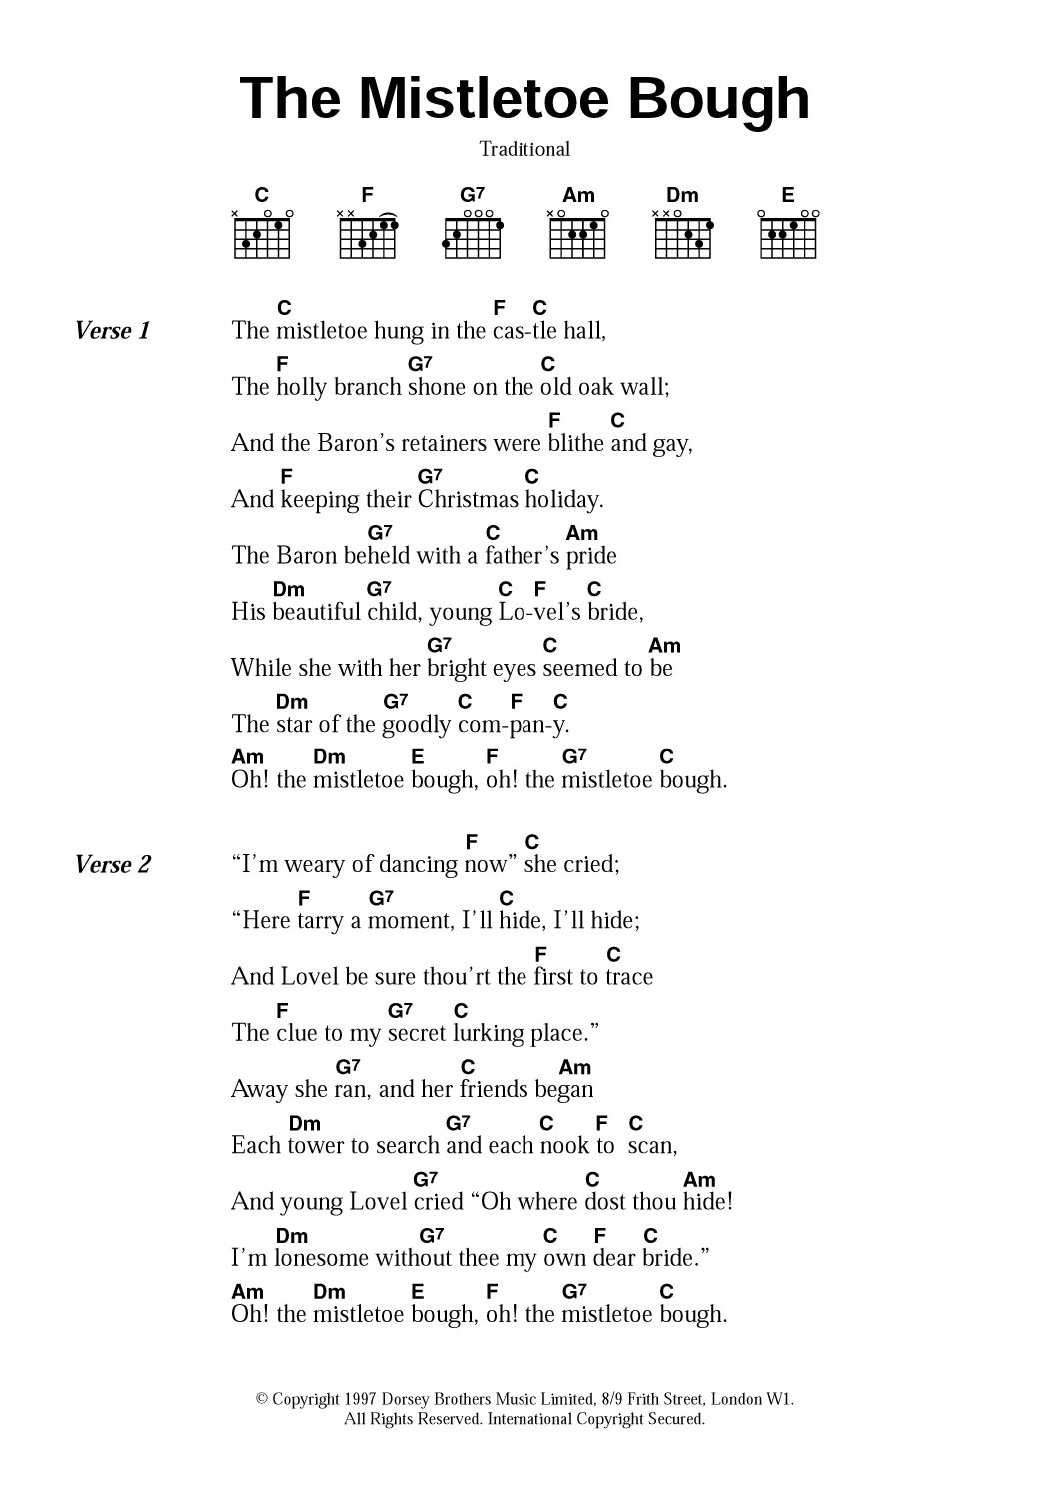 Traditional Carol The Mistletoe Bough Sheet Music Notes & Chords for Guitar Chords/Lyrics - Download or Print PDF